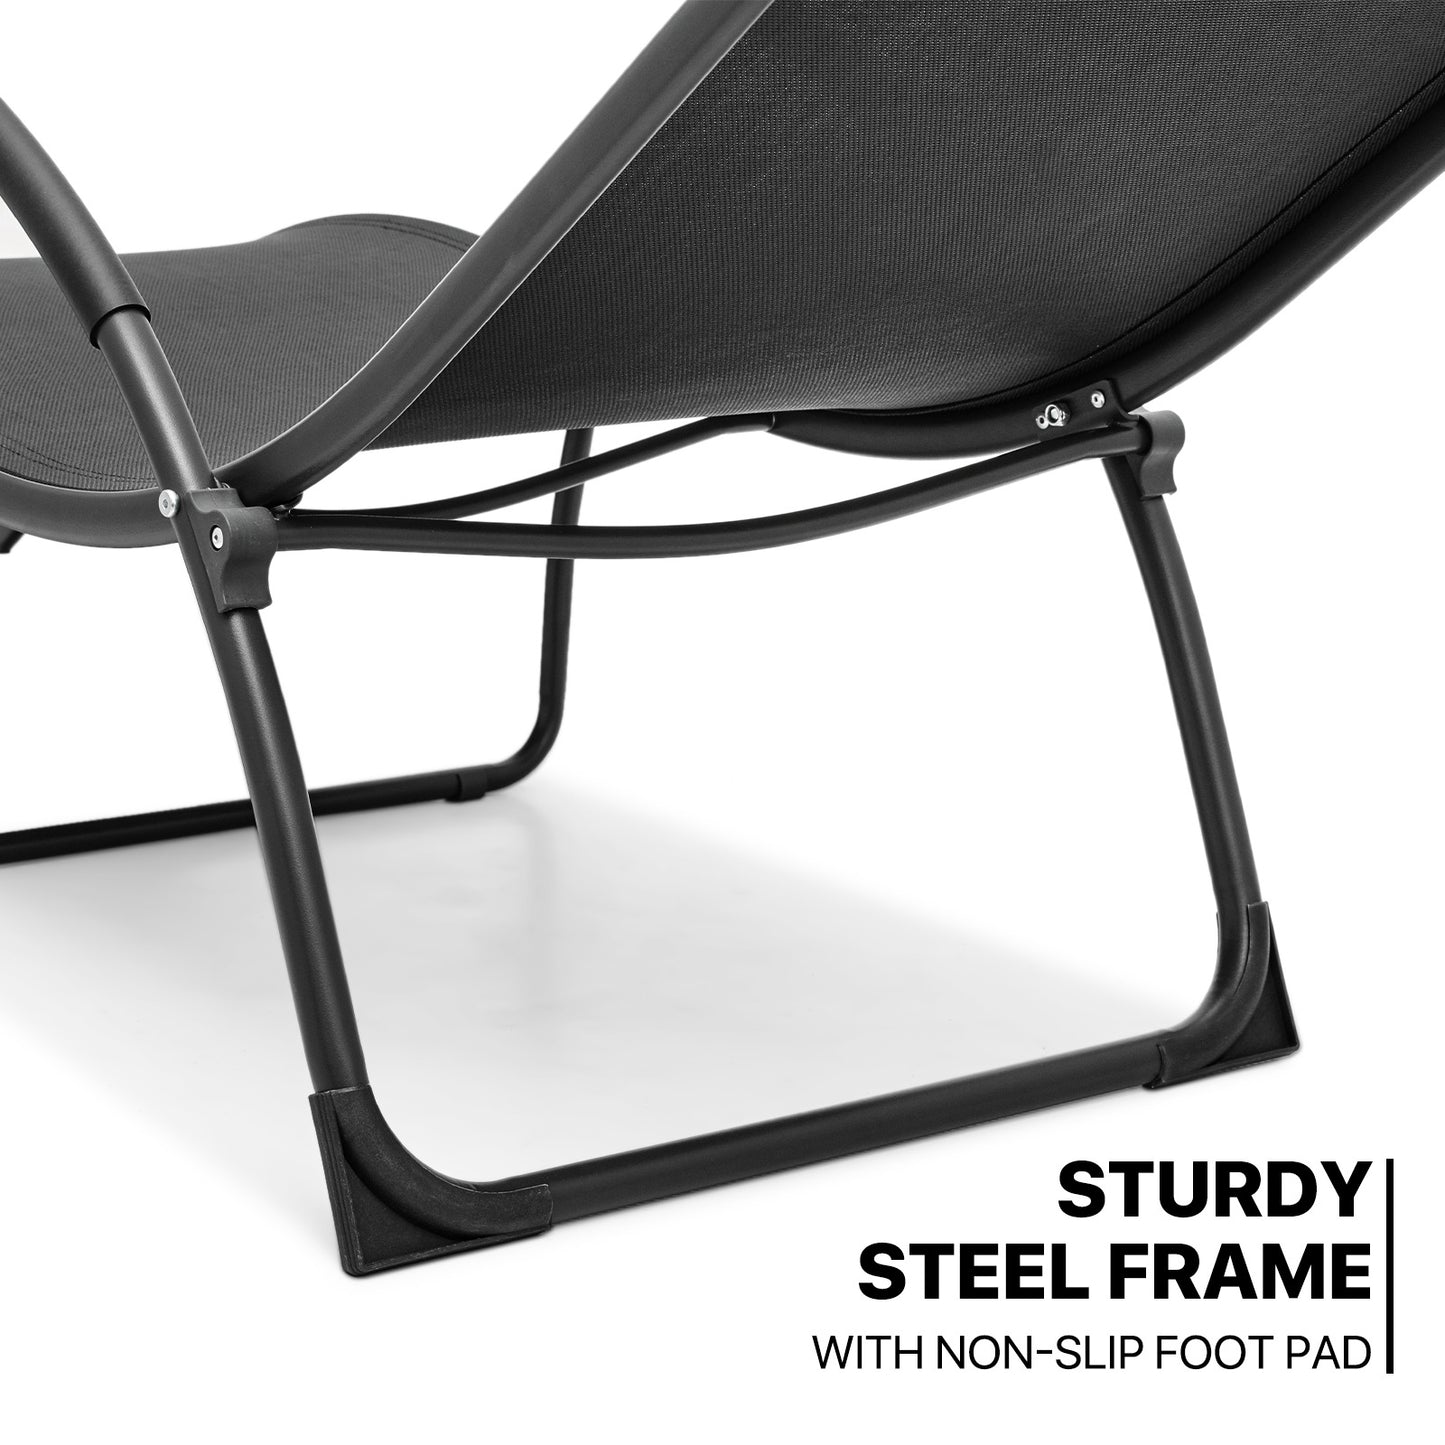 Patio Set - 2 Zero Gravity Chair + 1 Side Table